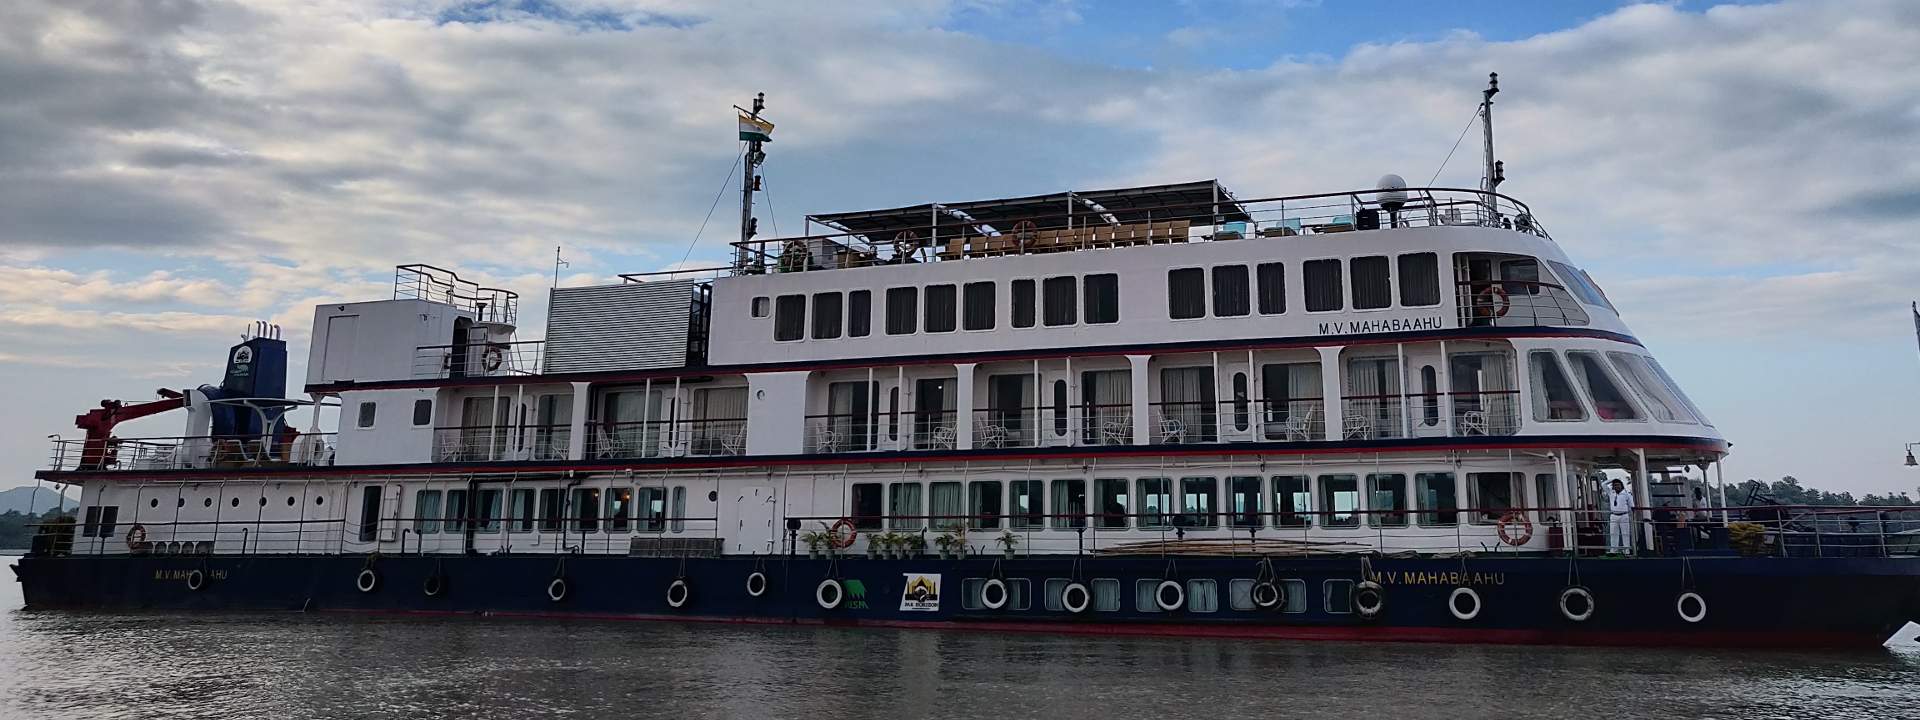 Łódź Motorowa MV Mahabaahu